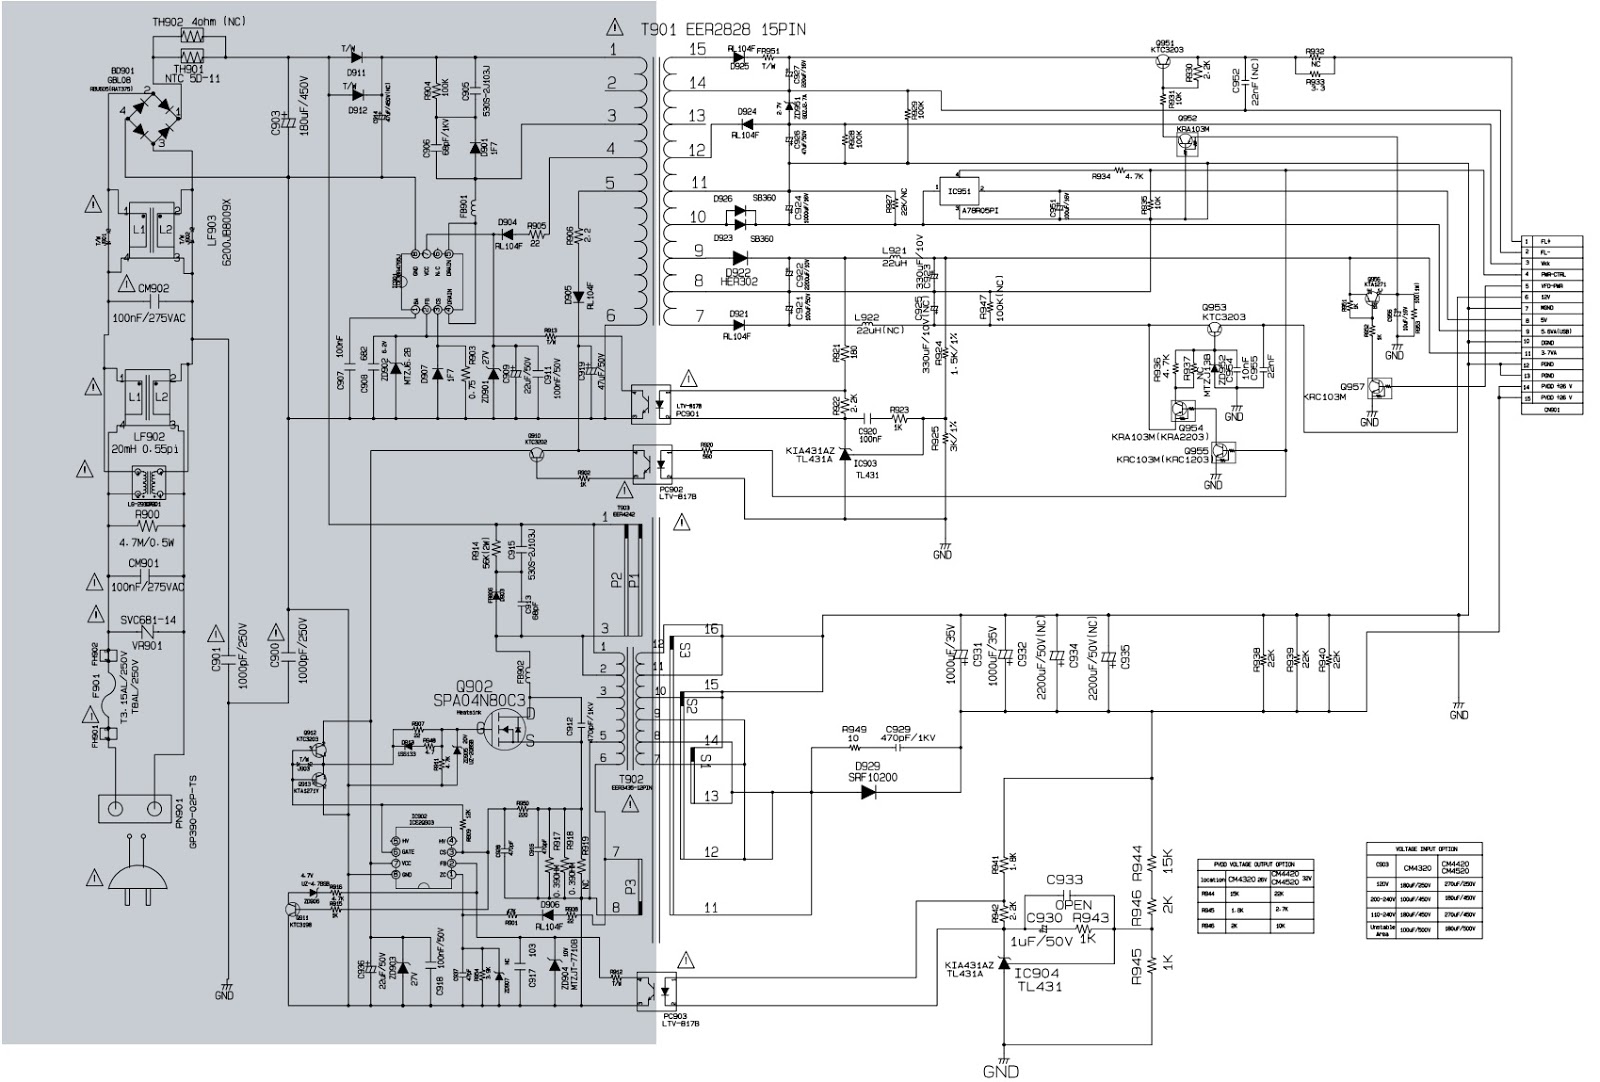 Schematic Diagrams: CM4320 LG Mini Hi-Fi system – SMPS circuit diagram